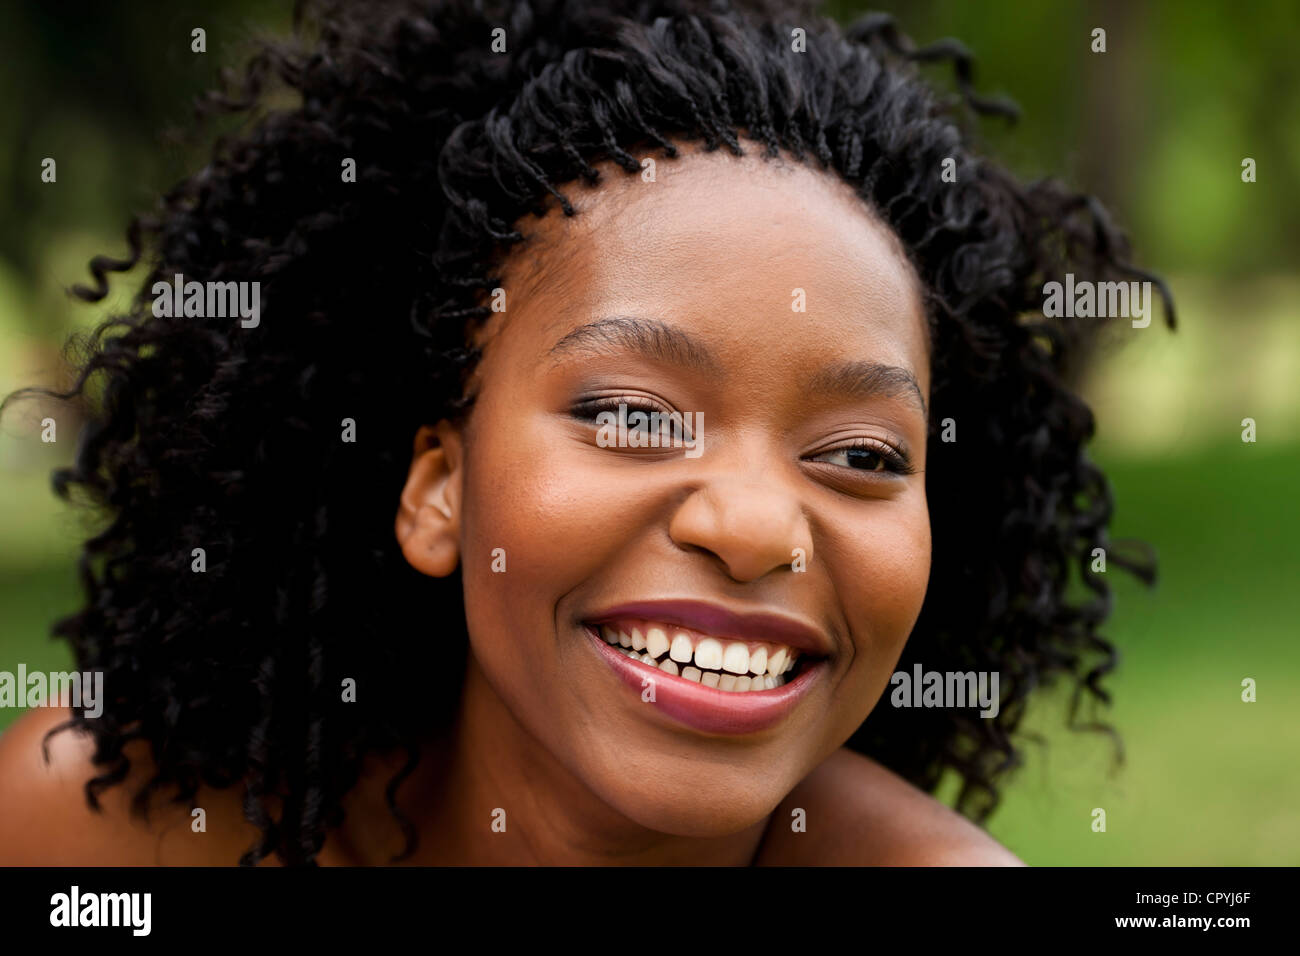 Closeup portrait of young black woman smiling Stock Photo - Alamy